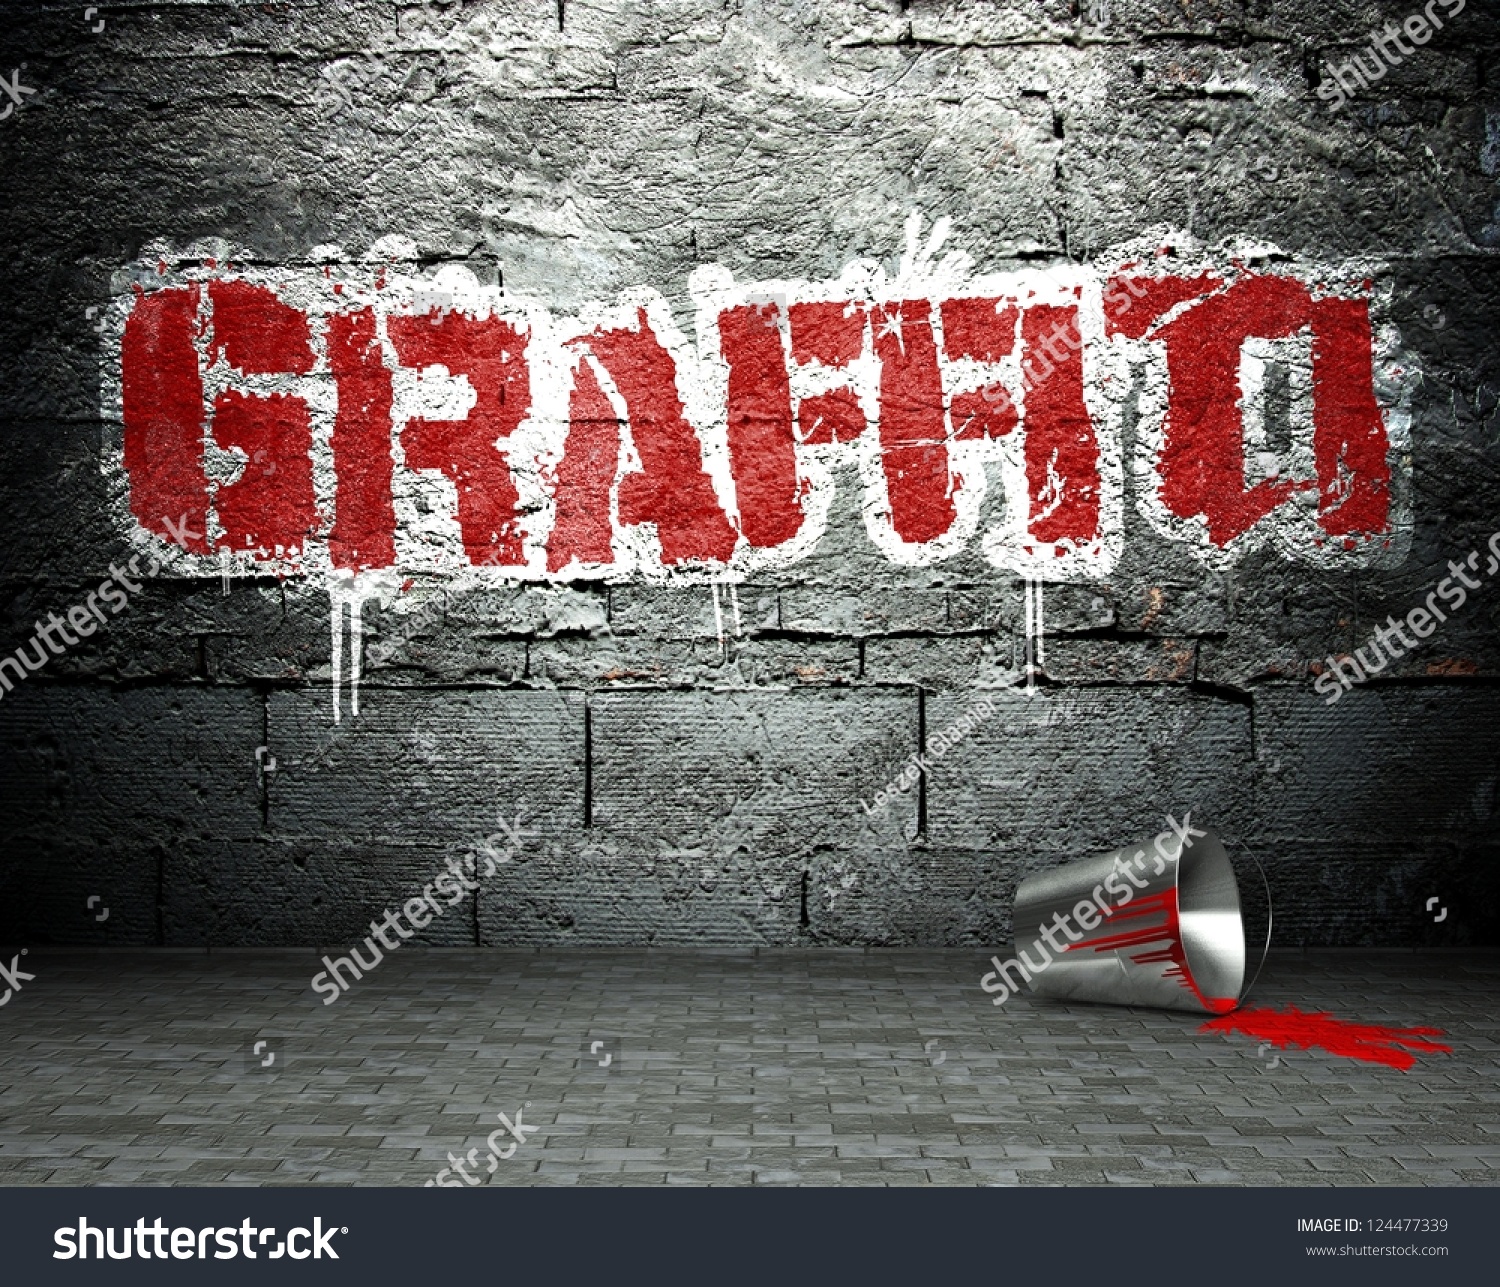 Graffiti Wall With Word, Street Art Background Stock Photo 124477339 ...